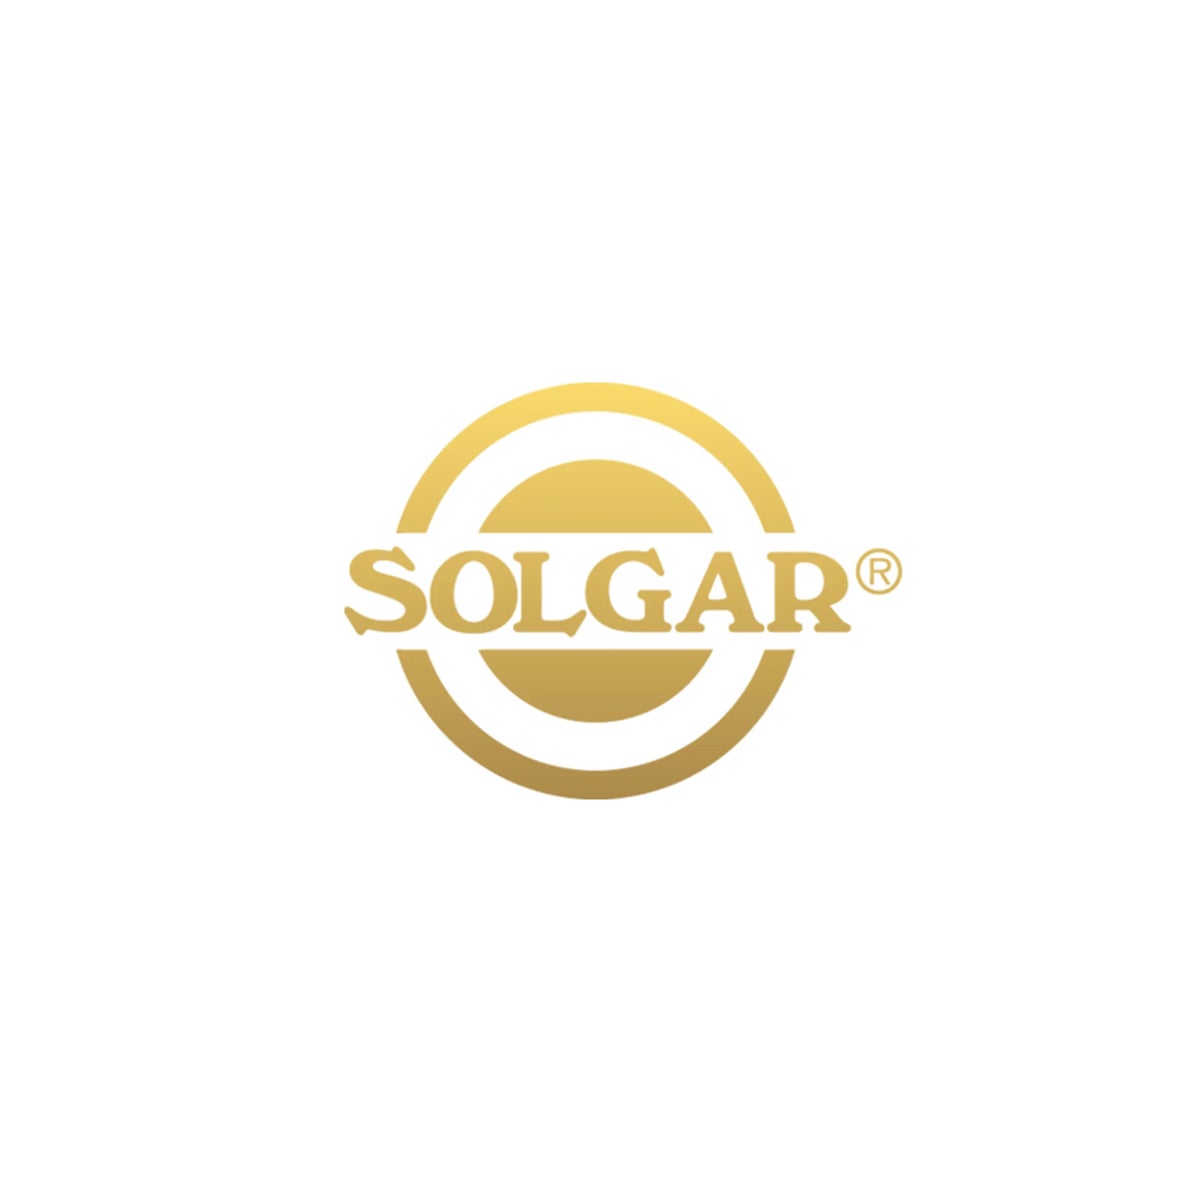 Solgar® logo